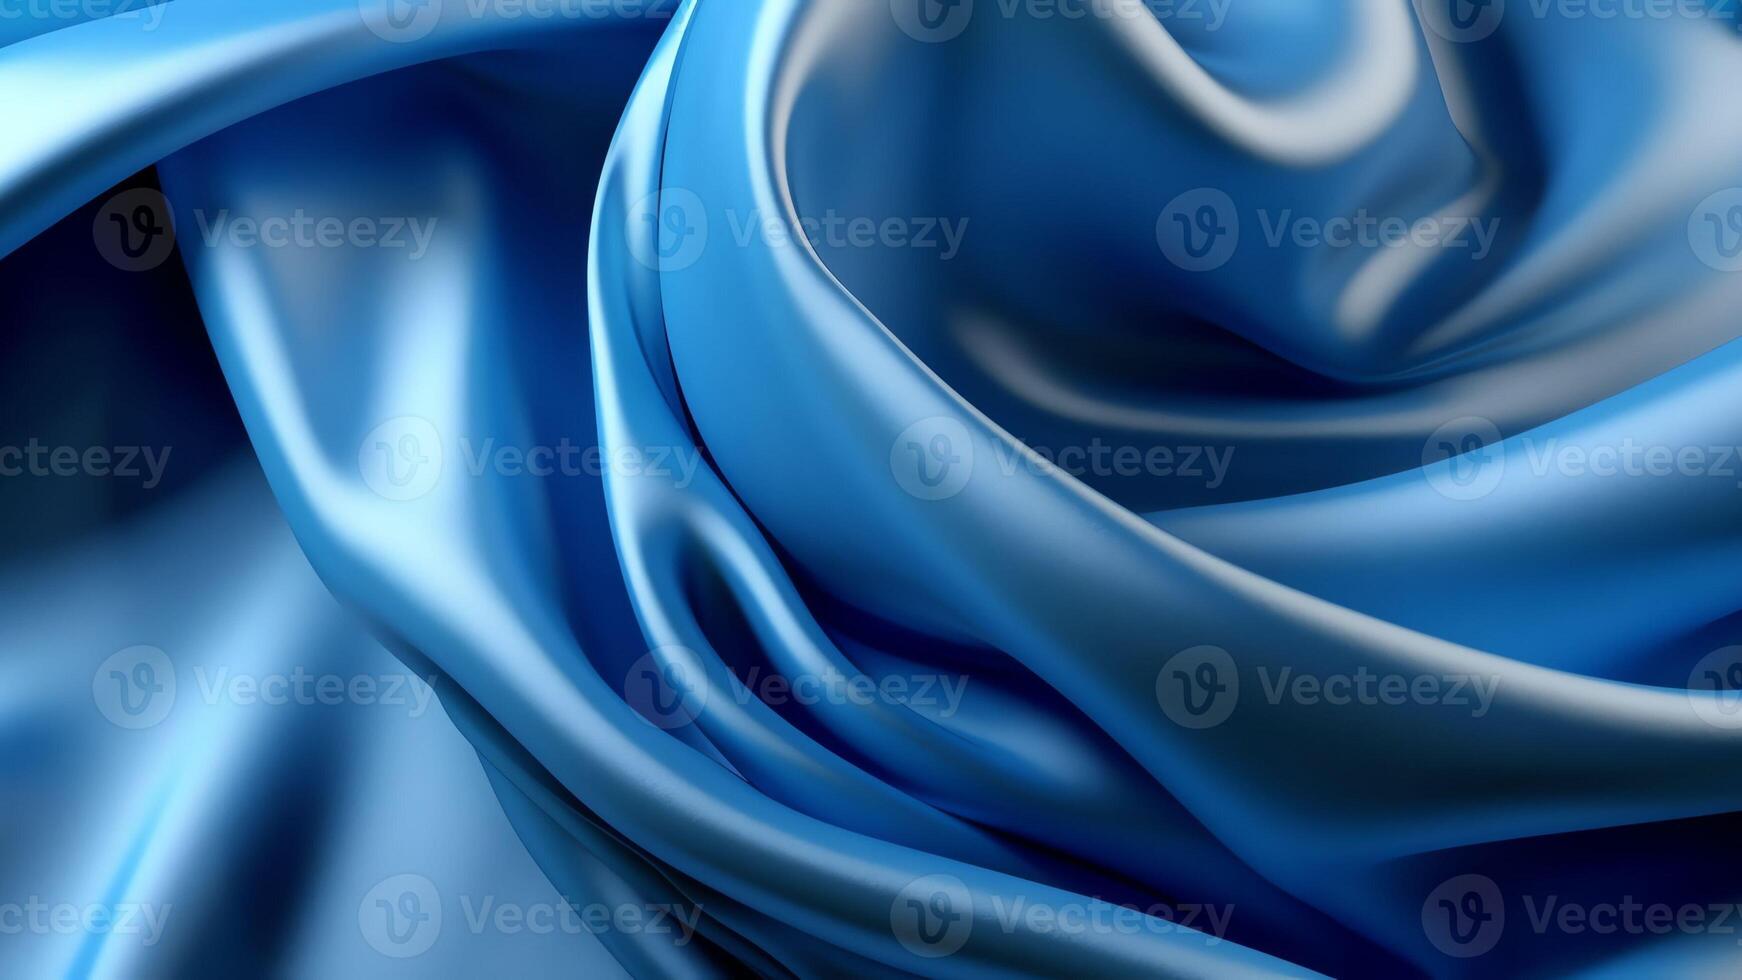 Blue Satin Background. A soft light blue satin material background